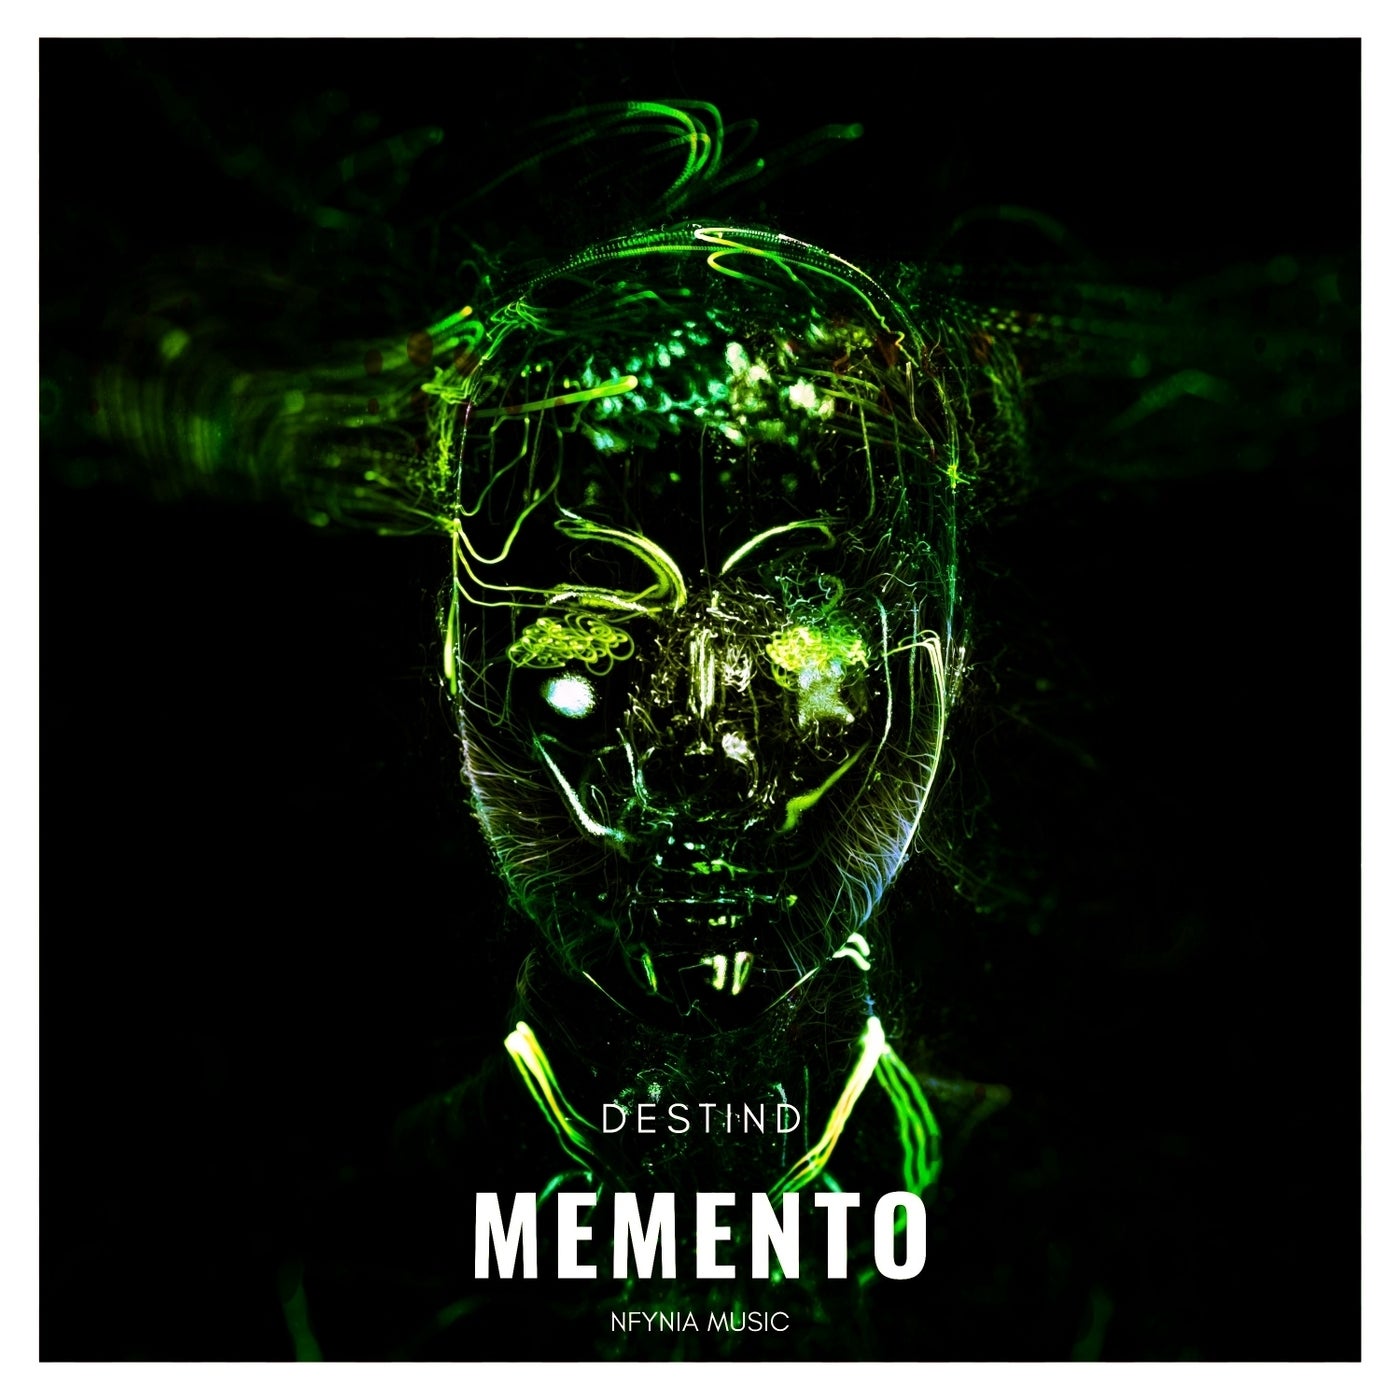 Destind - Memento [Nfynia Music]